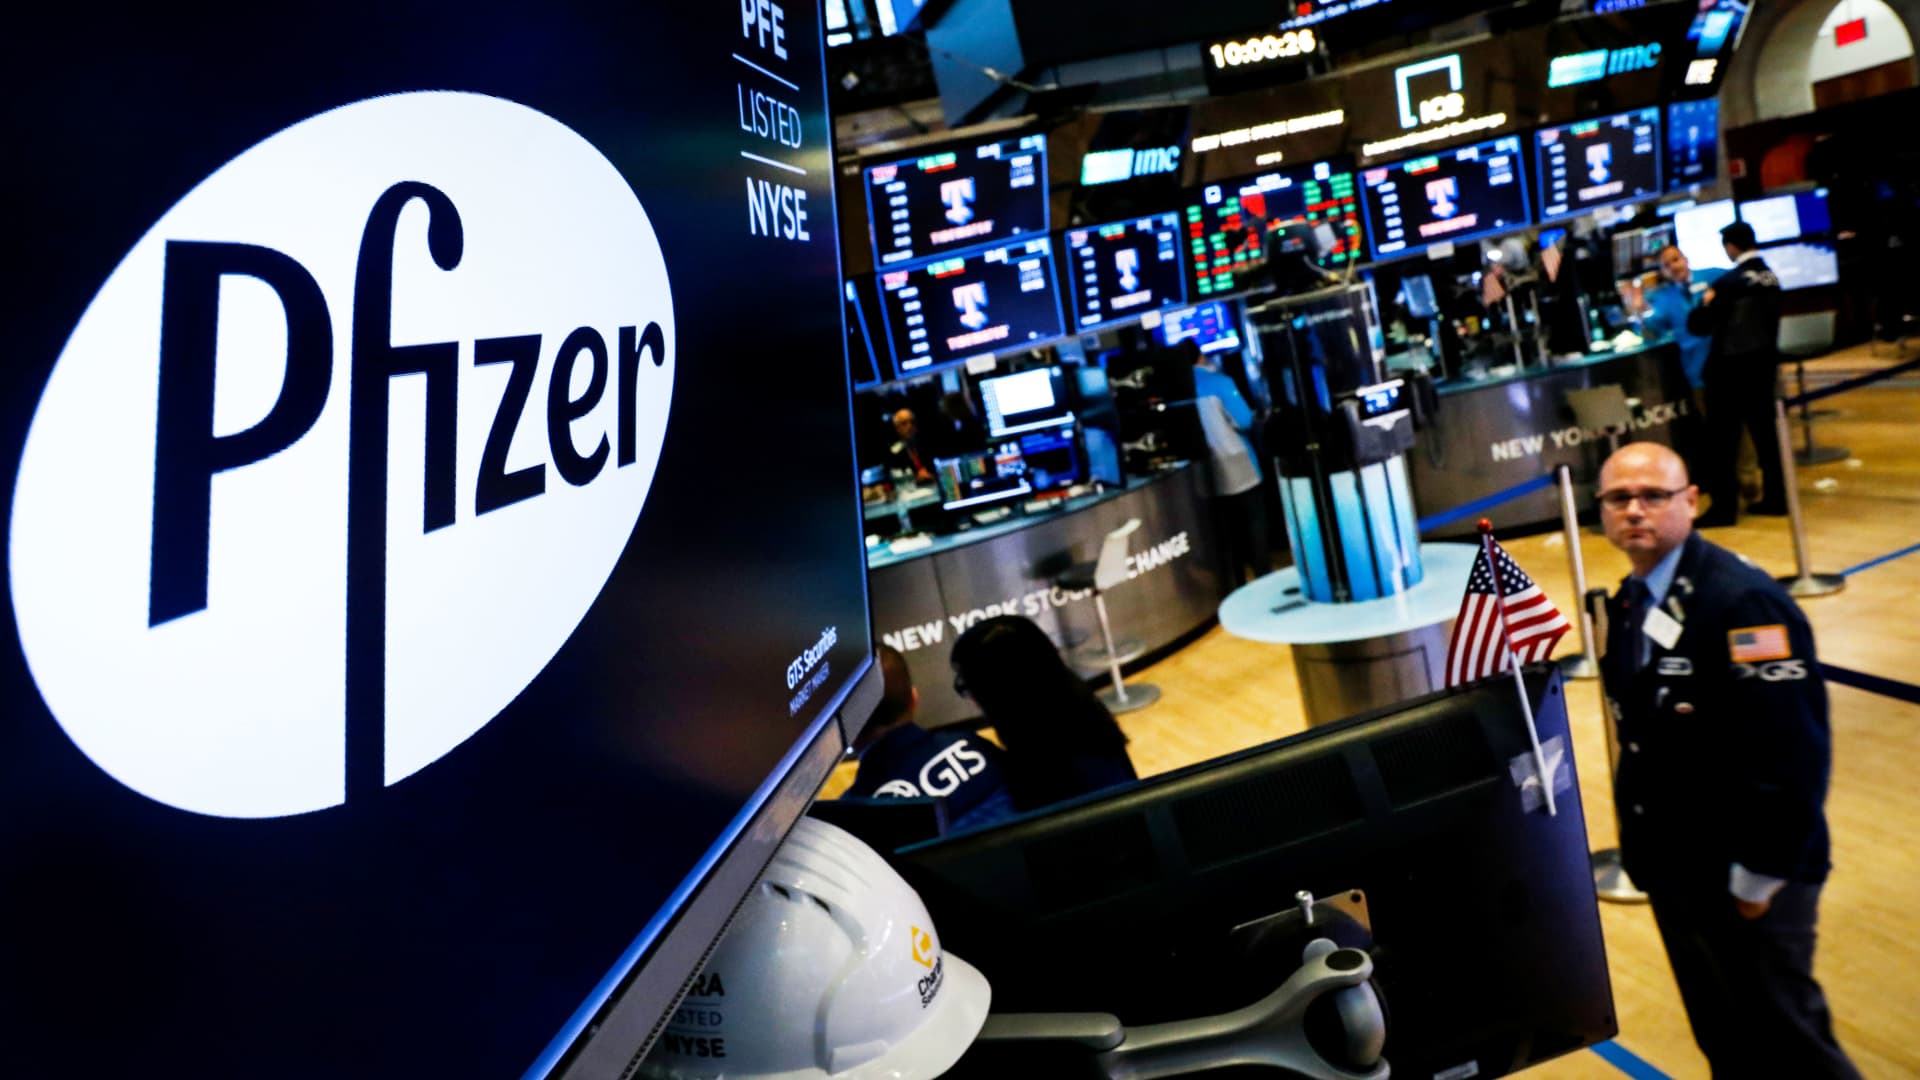 Pfizer to raise billion in debt offering to fund Seagen acquisition, SEC filing shows